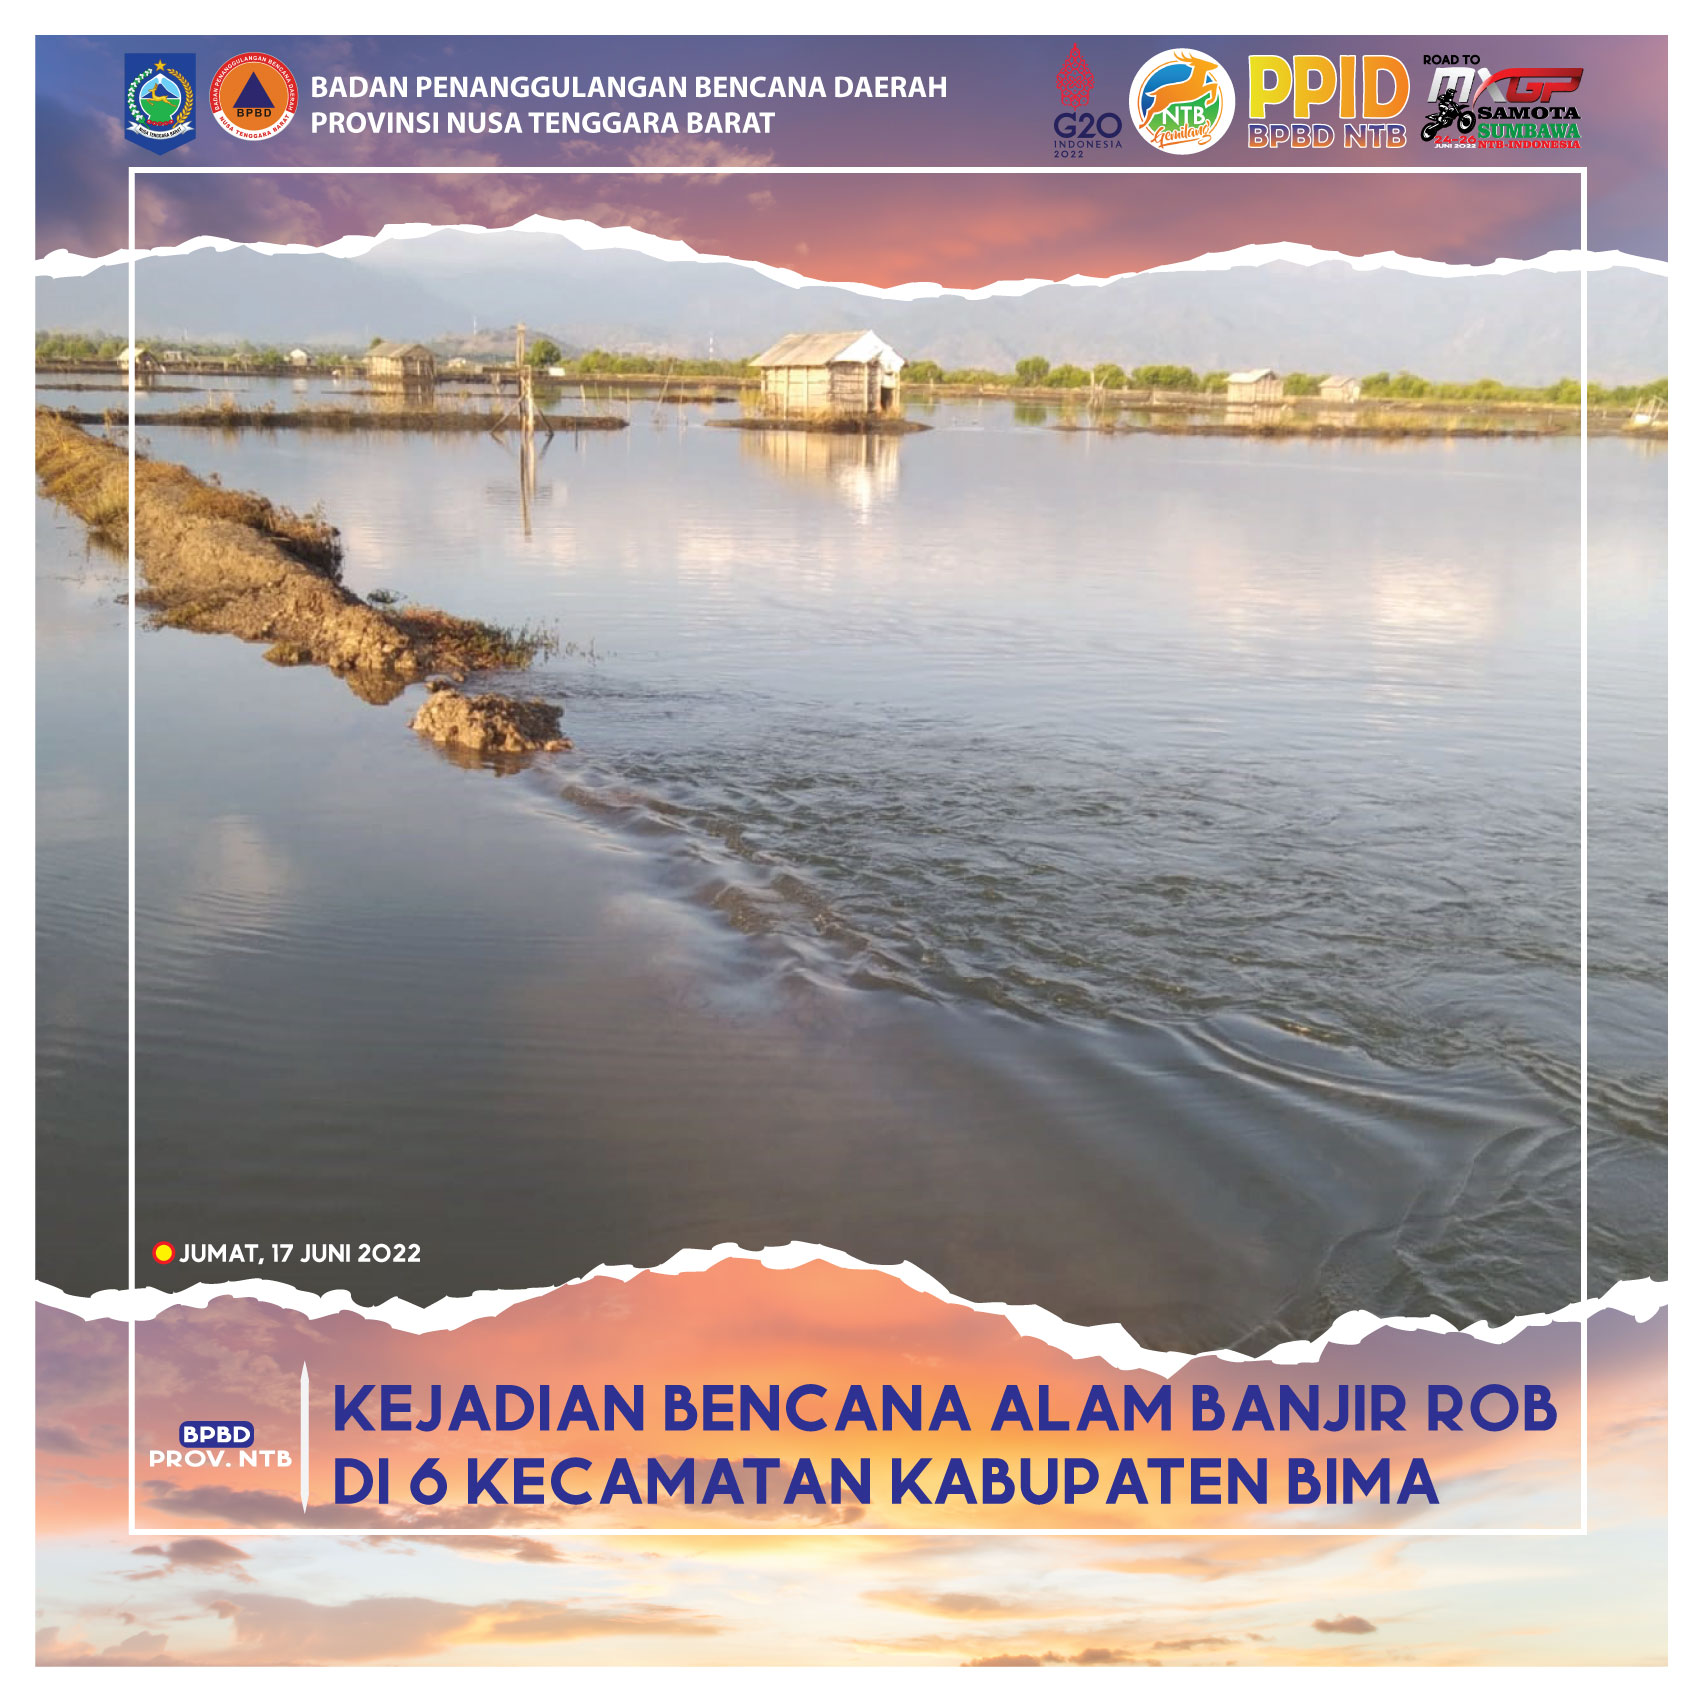 Kejadian Bencana Alam Banjir Rob di 6 Kecamatan Kabupaten Bima (Jumat, 16 Juni 2022)